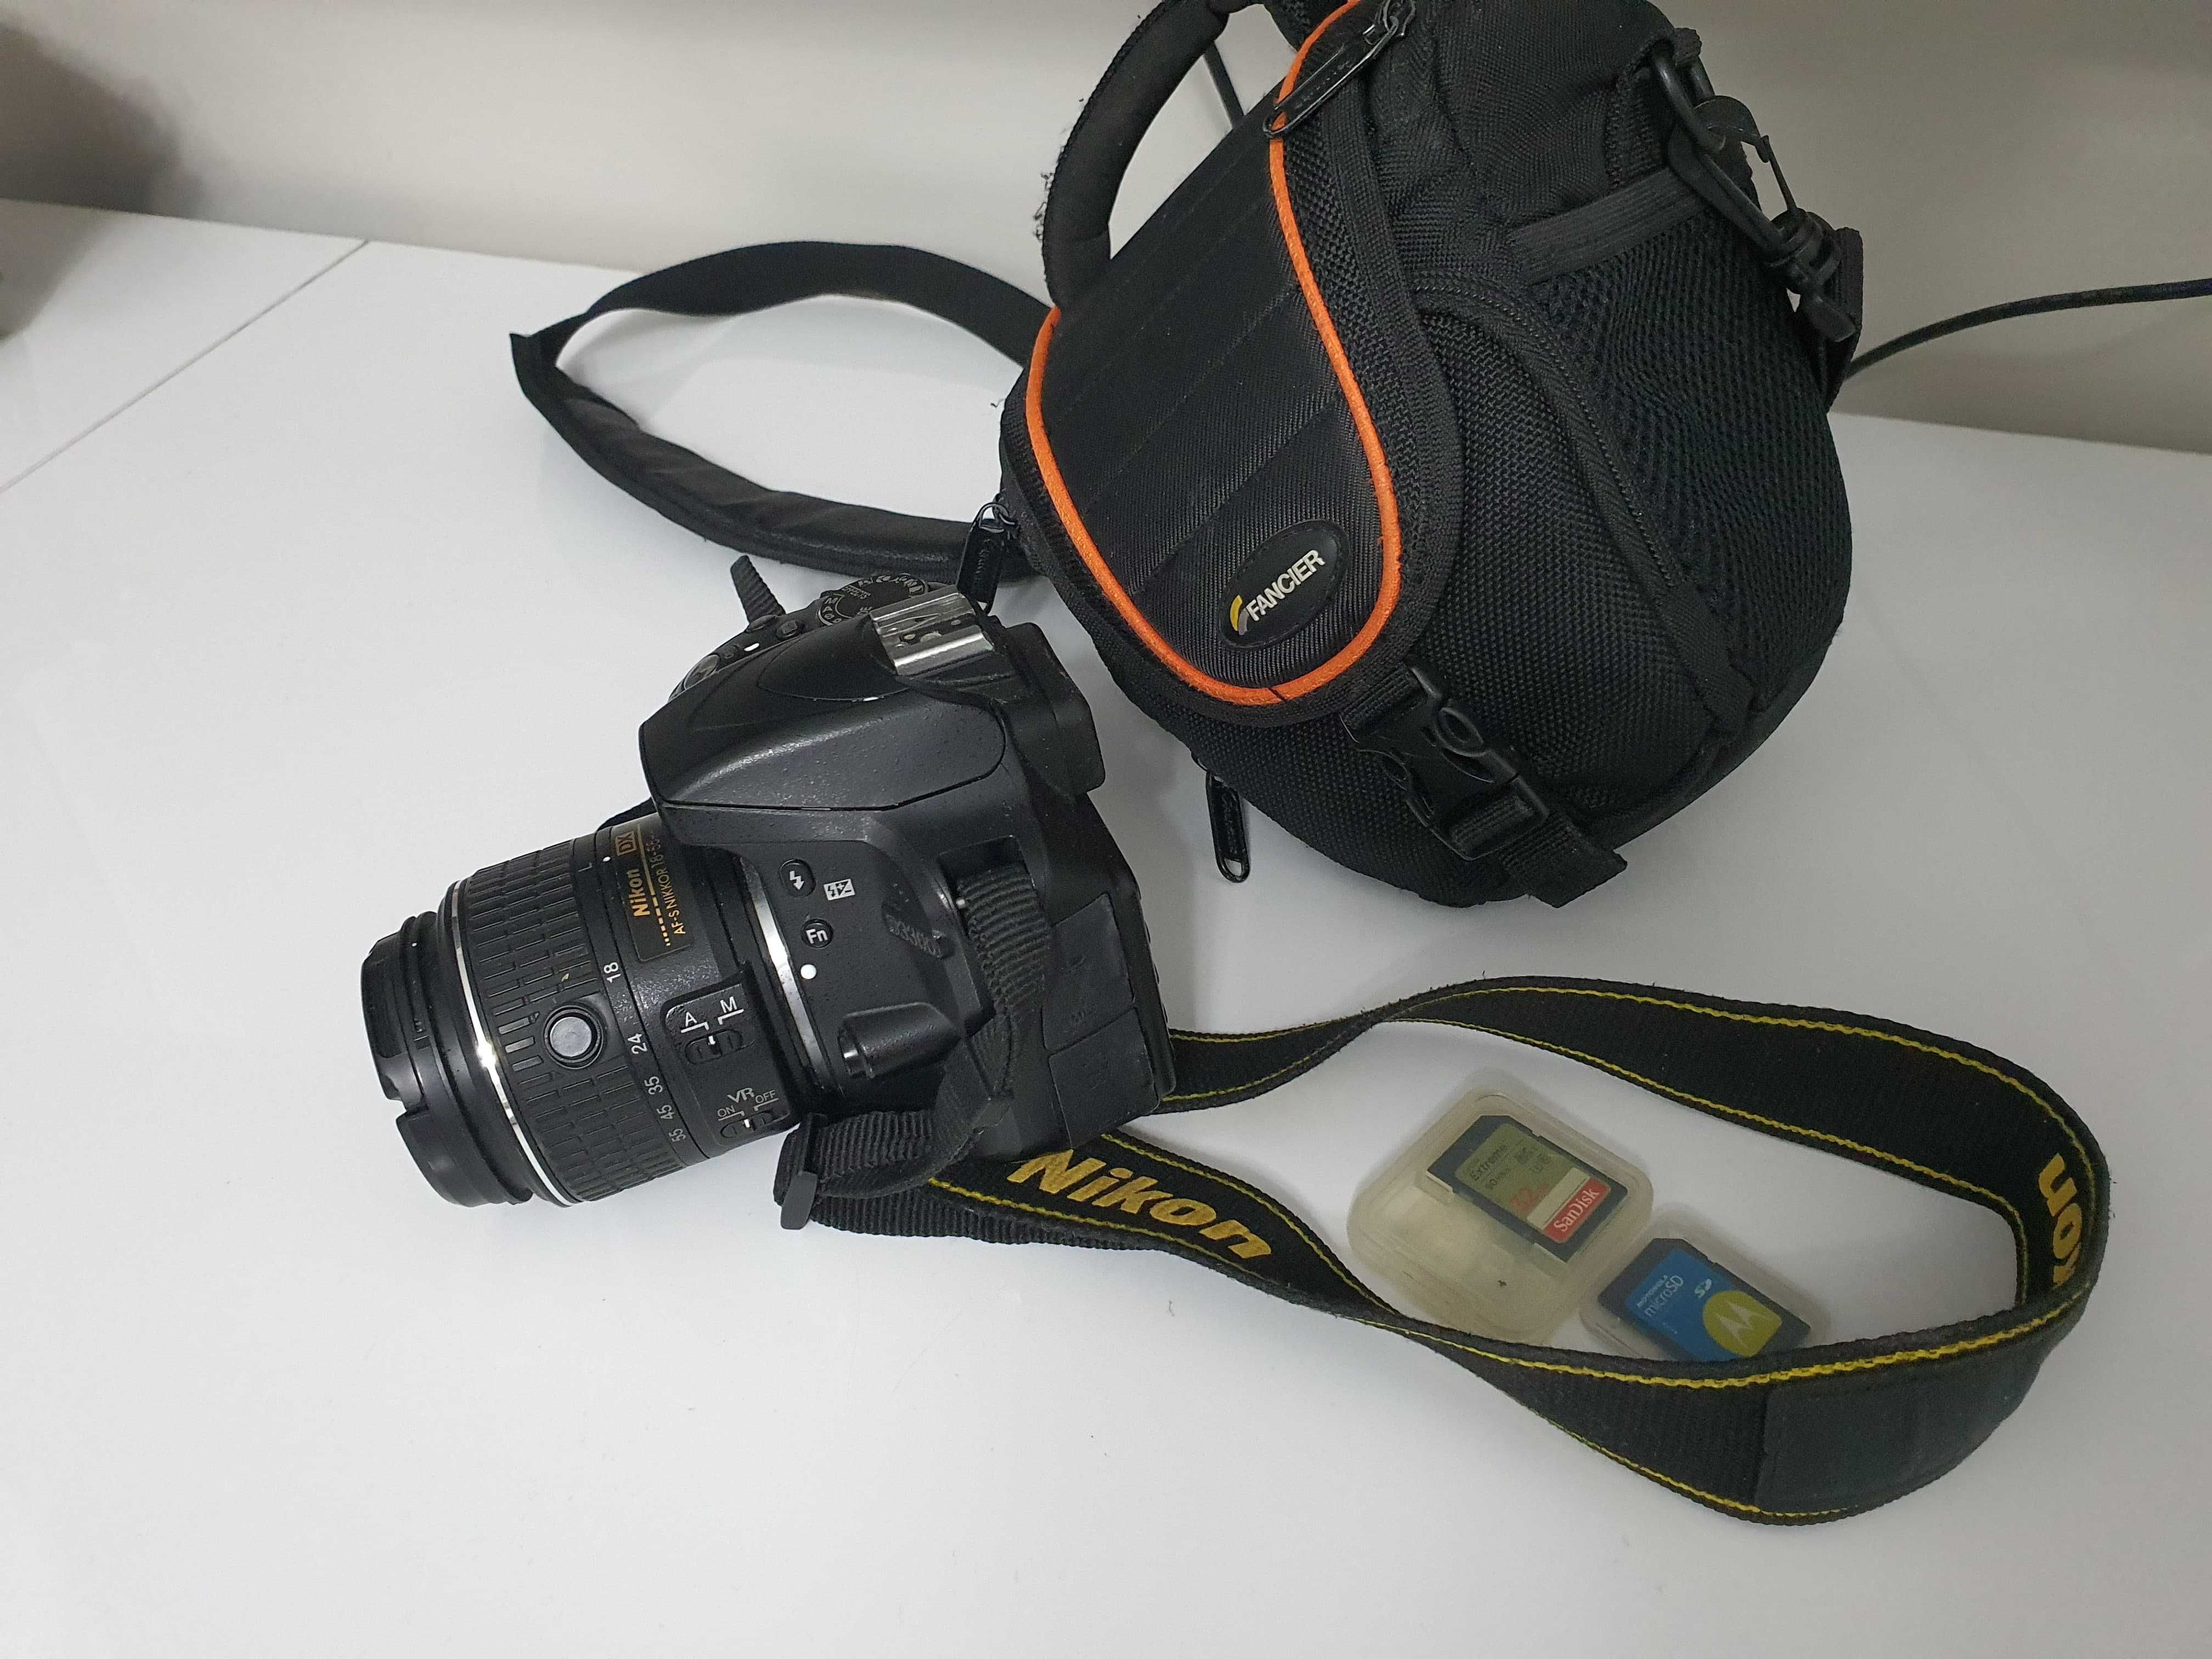 Vand aparat foto DSLR Nikon D3300 cu obiectiv original 18-55mm